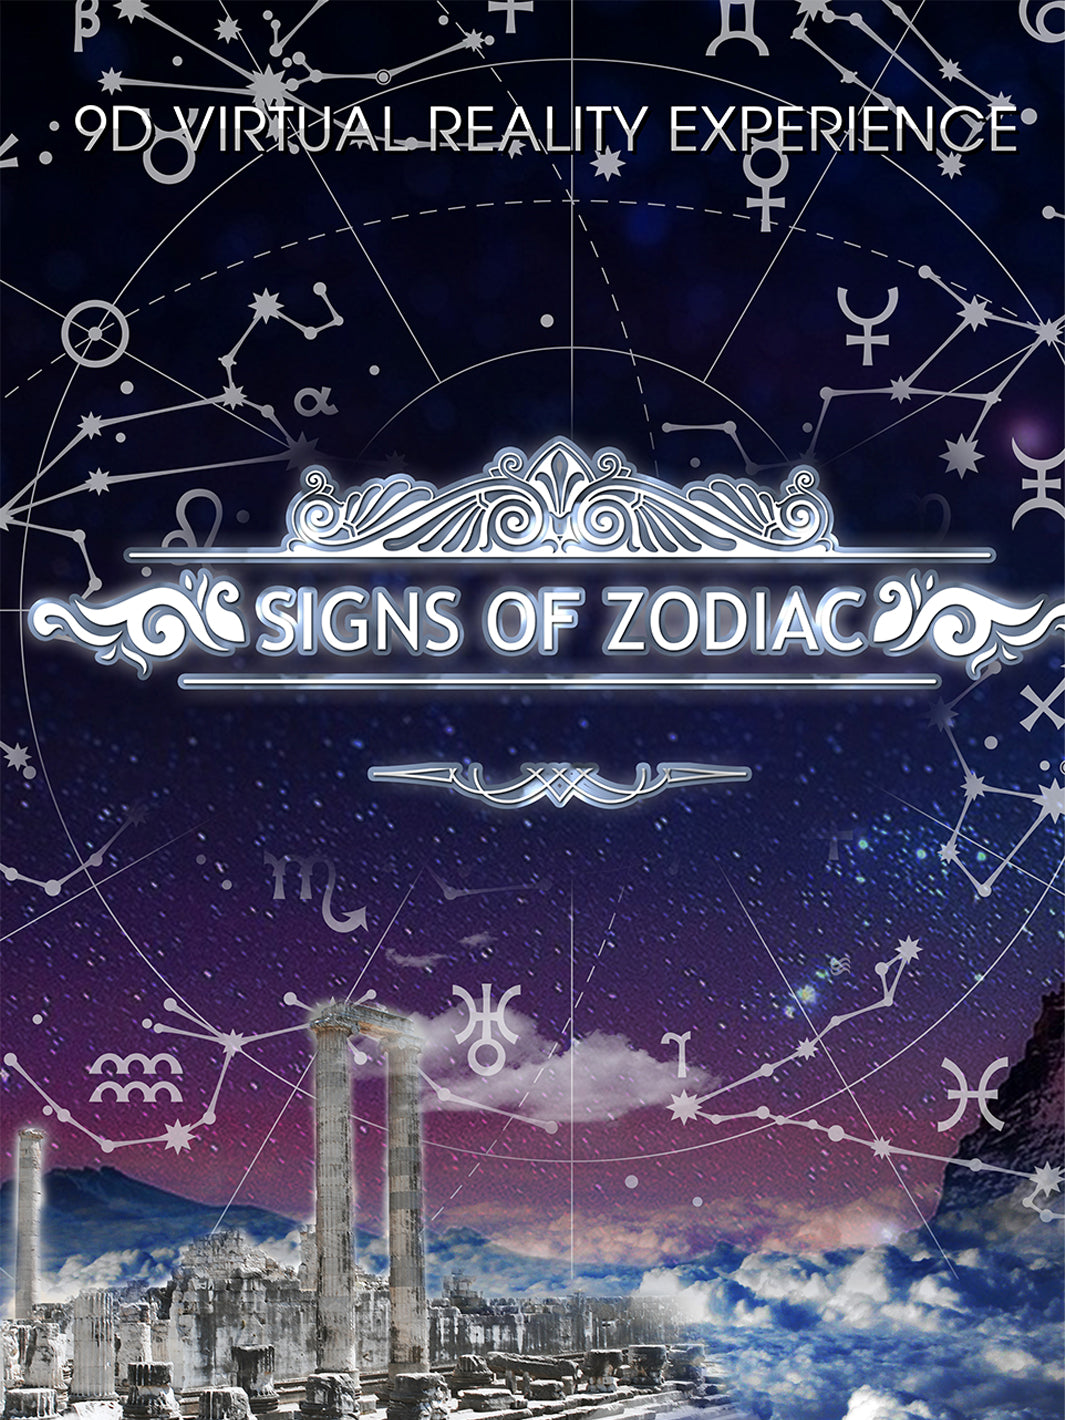 signs of zodiac - ShallxR VR Games